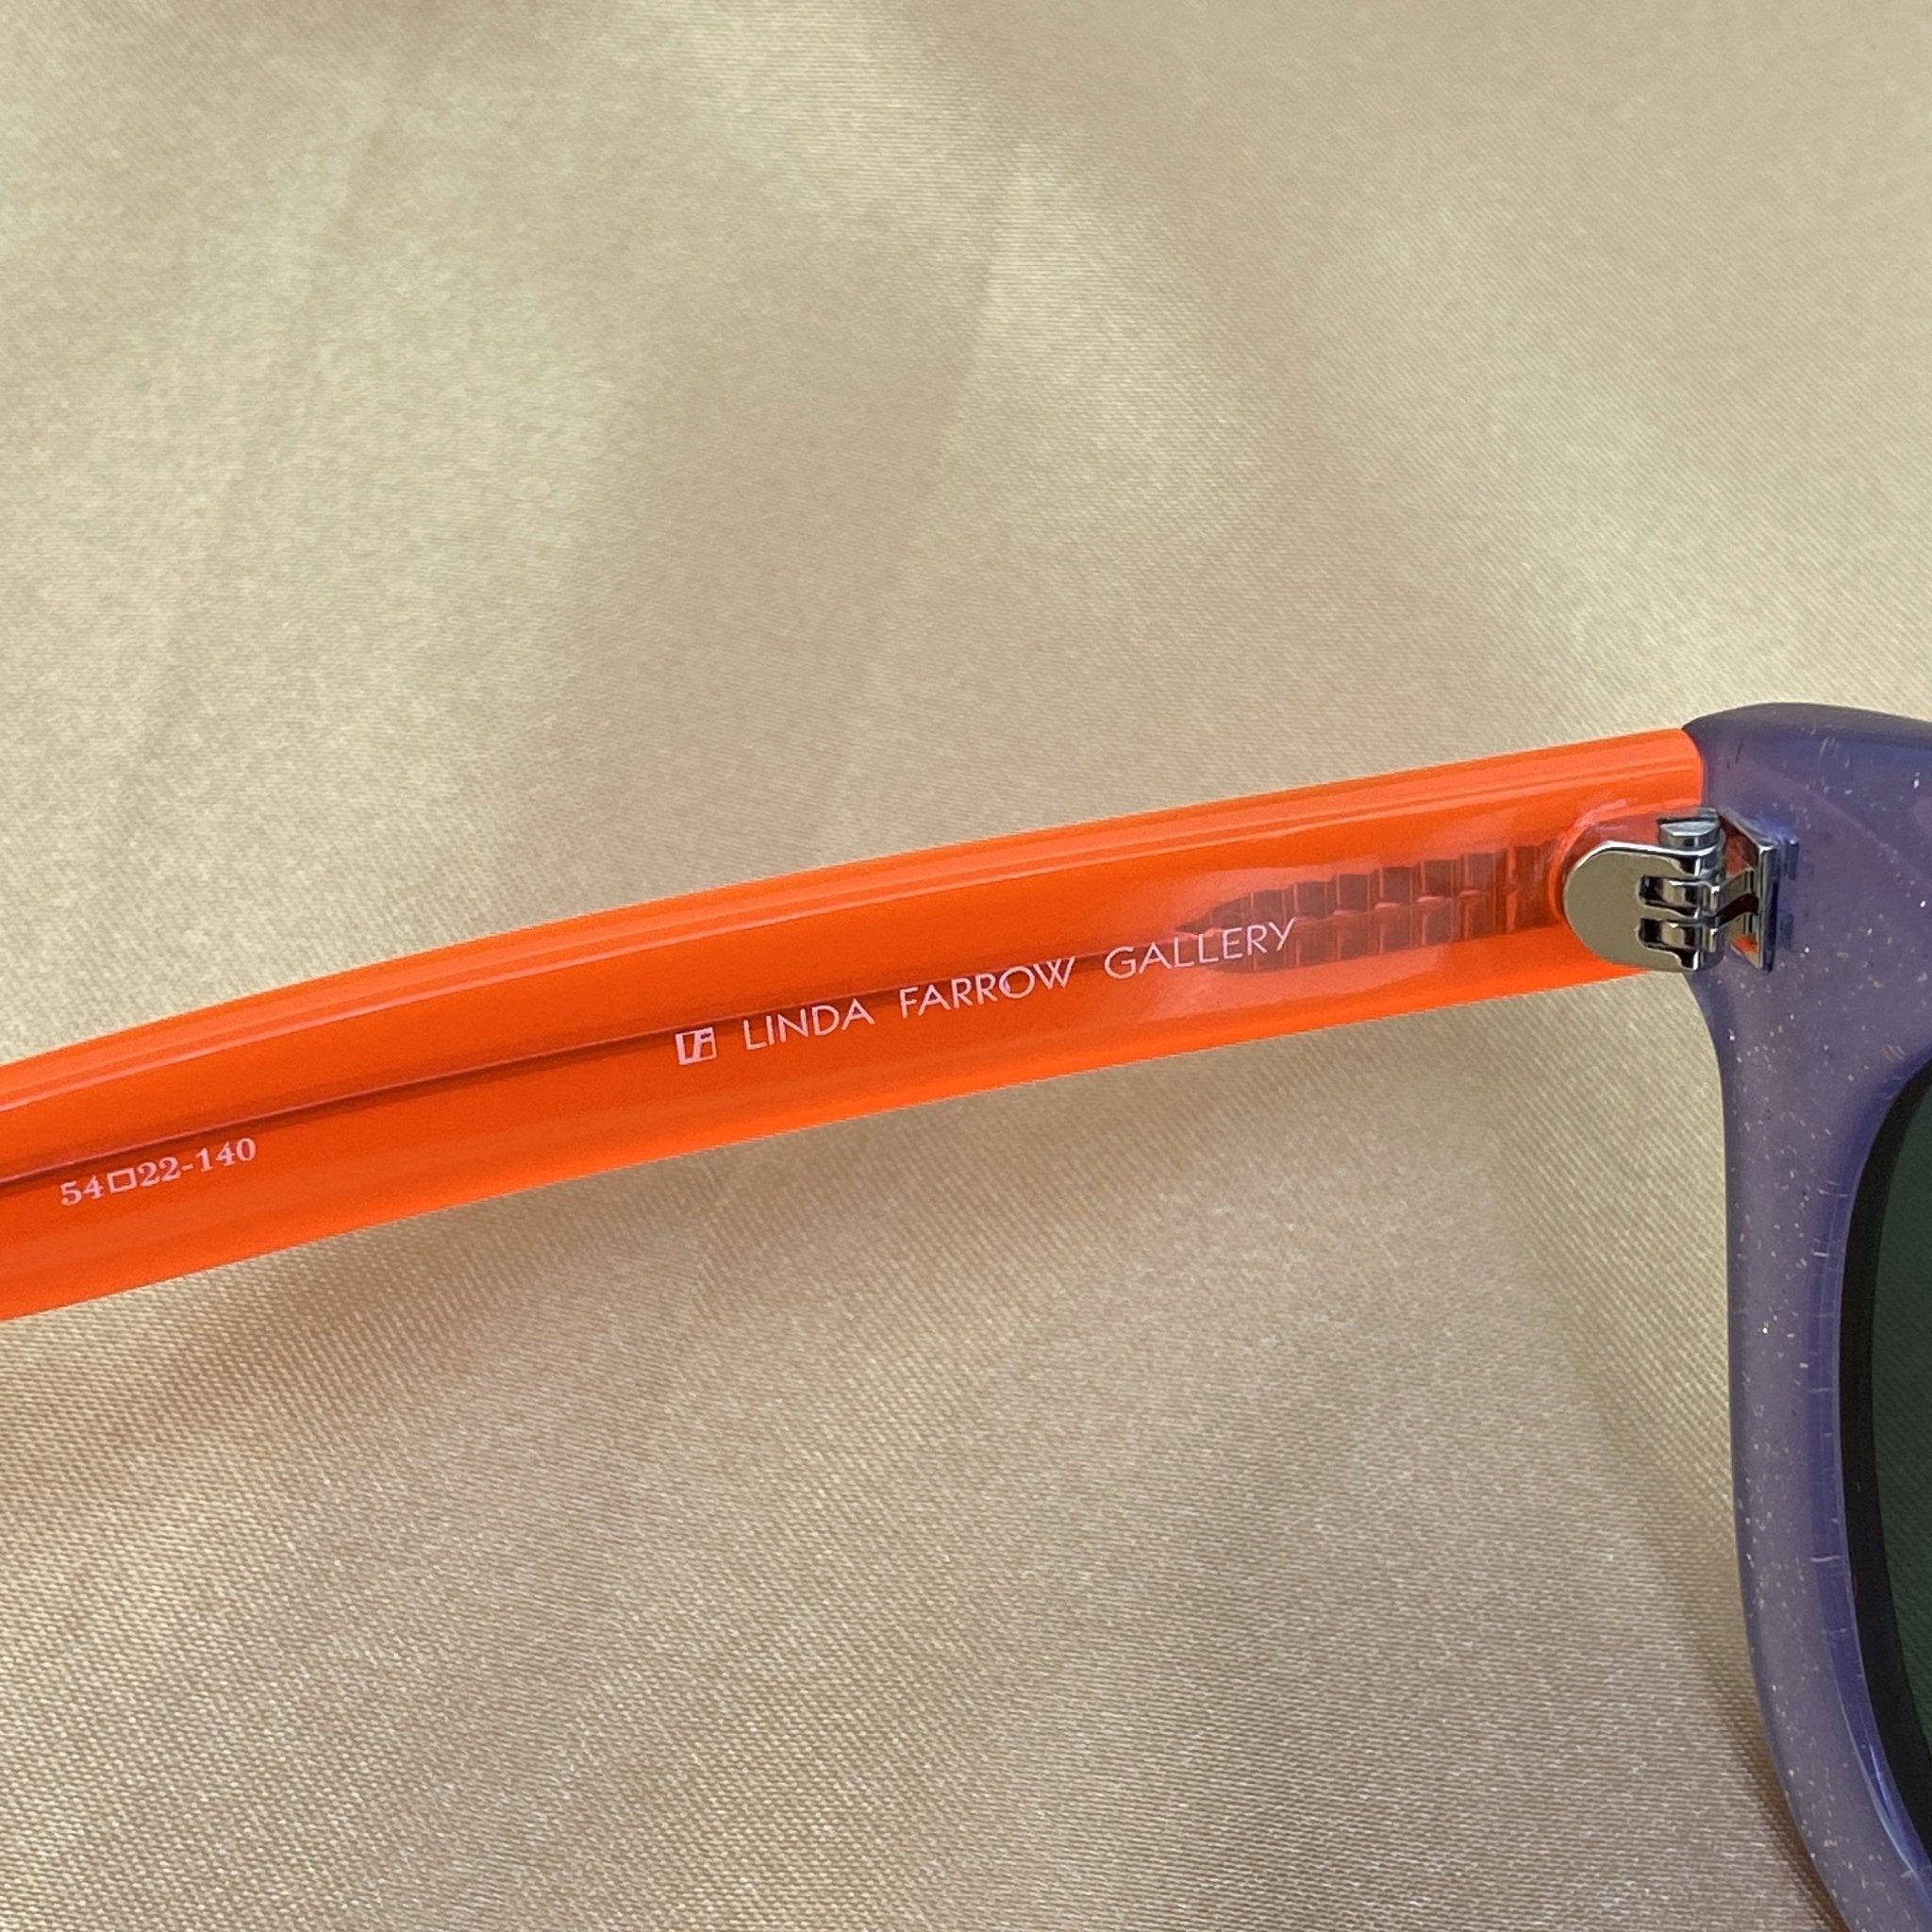 Markus Lupfer Sunglasses D-Frame Lilac Glitter Neon Orange Lenses Category 3 Dark Tint ML5C5SUN - Watches & Crystals